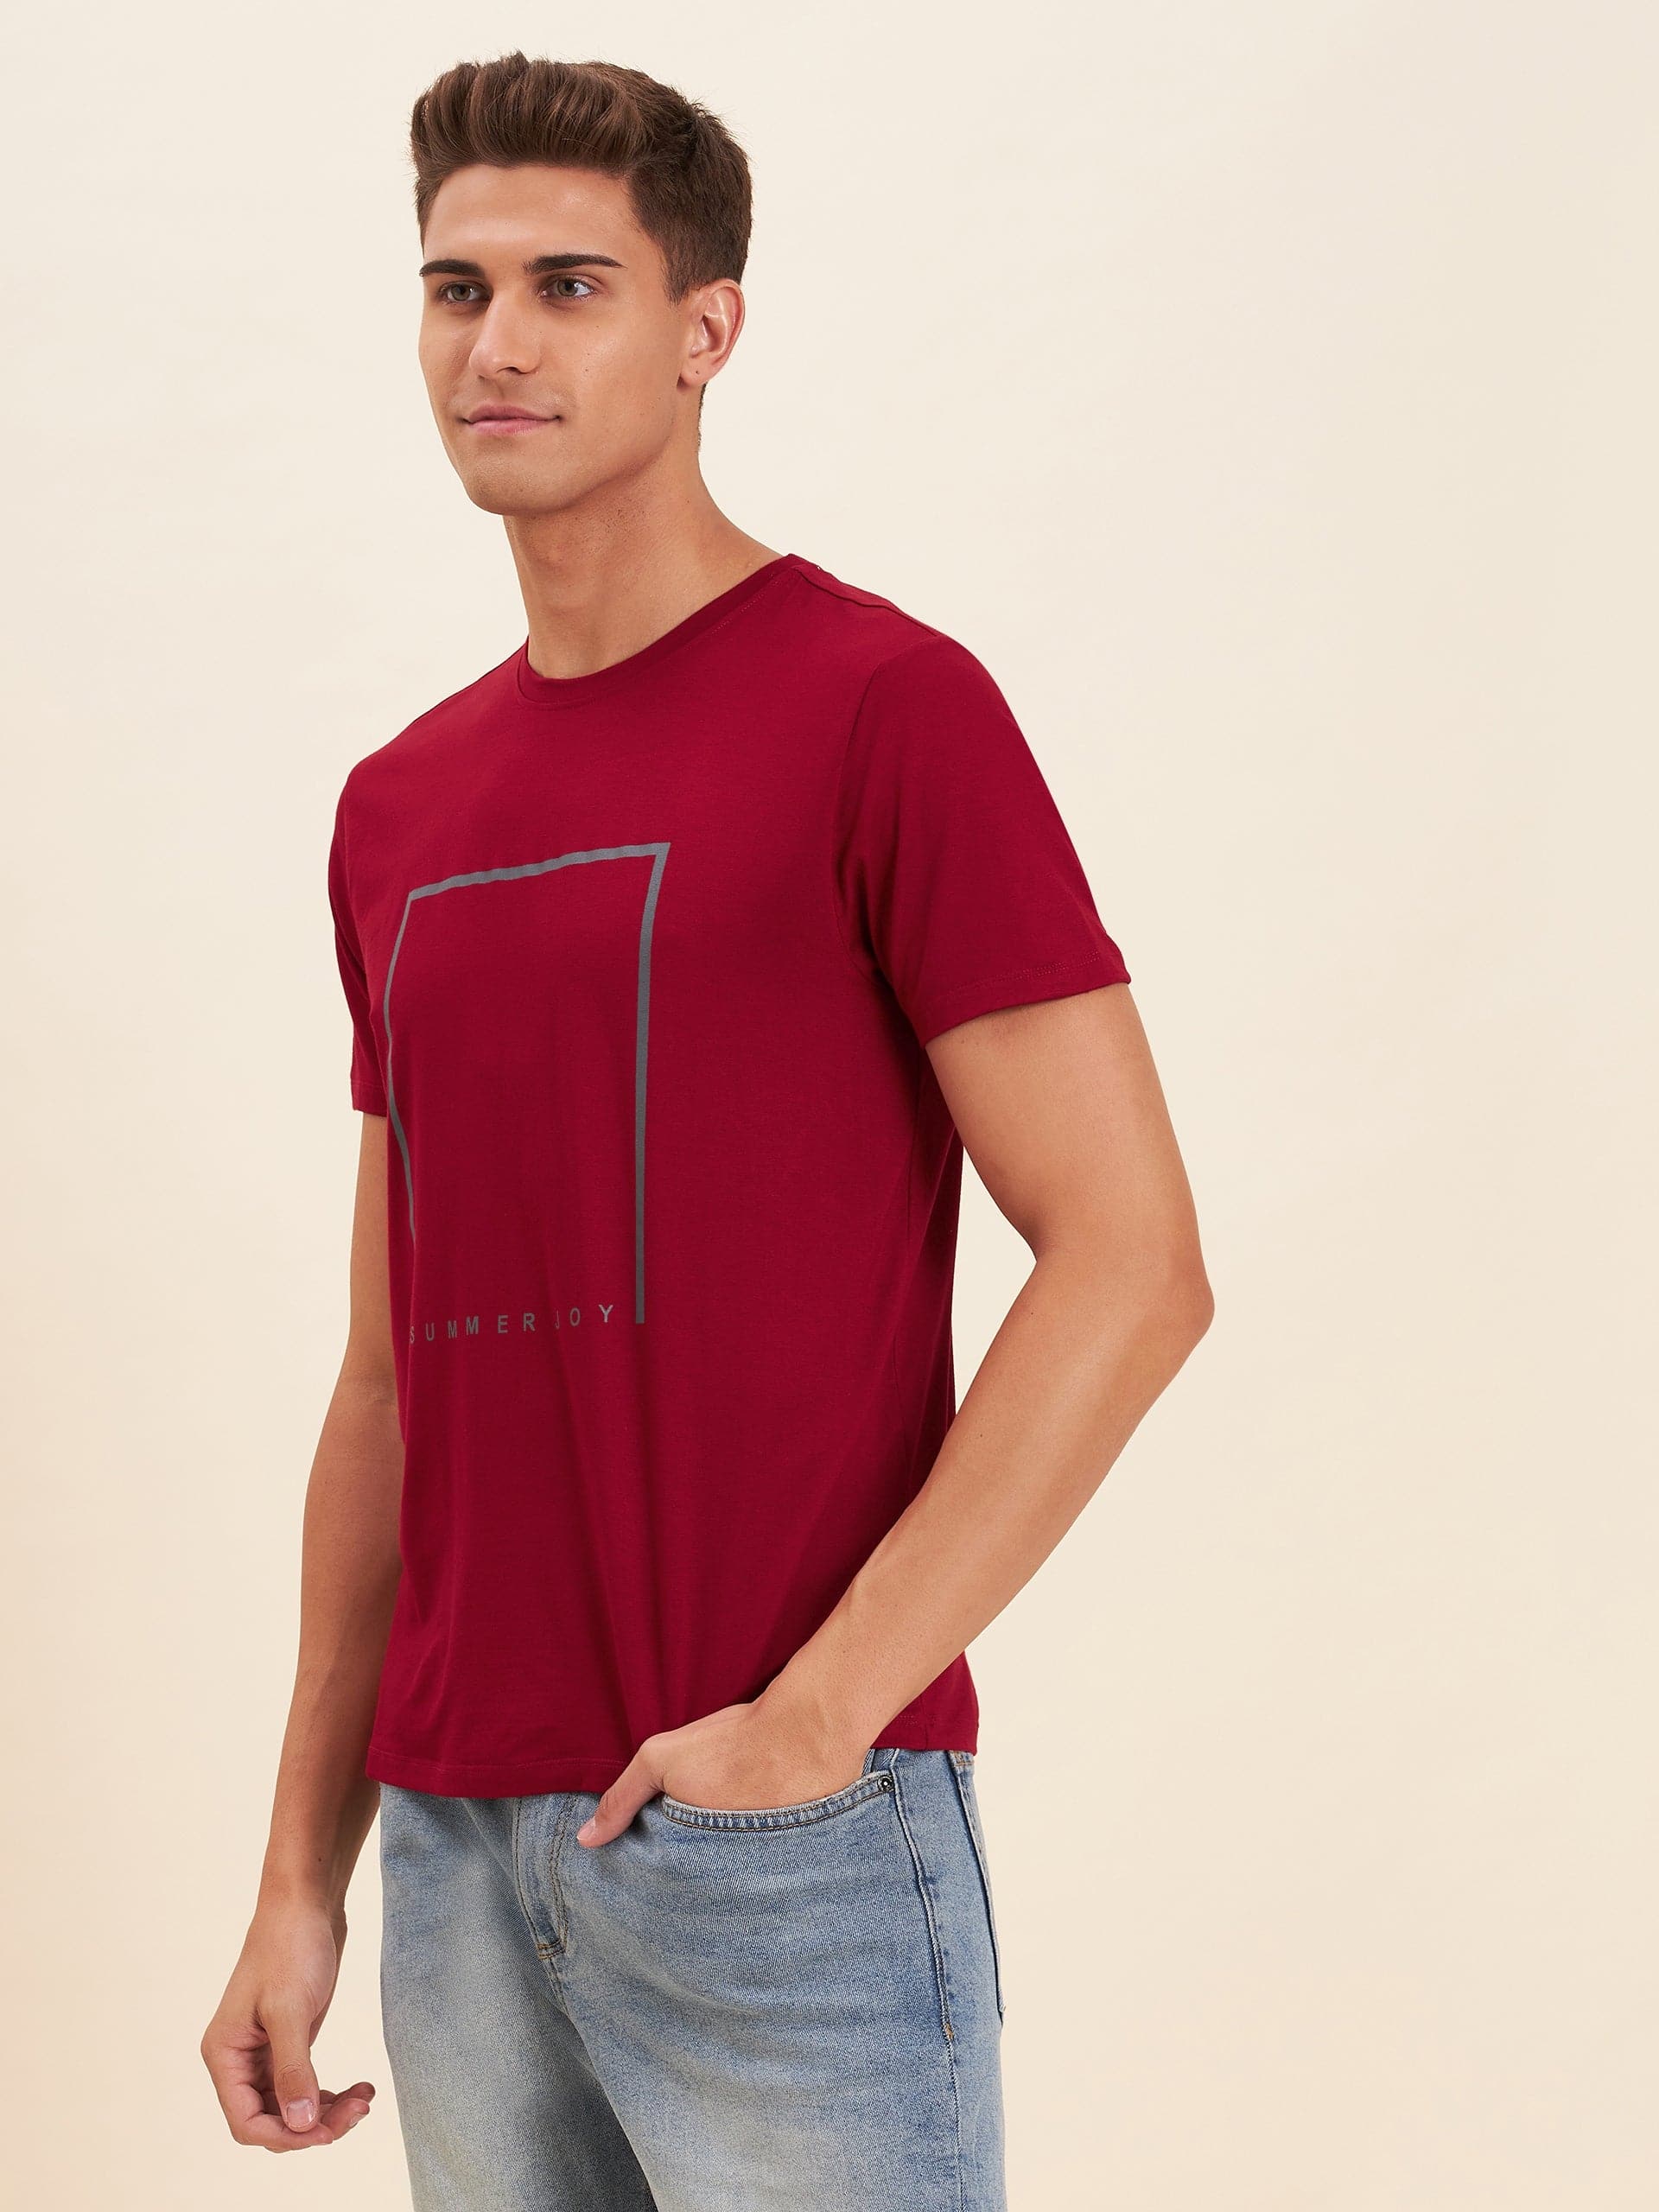 Men's Red Viscose SUMMER JOY T-Shirt - LYUSH-MASCLN